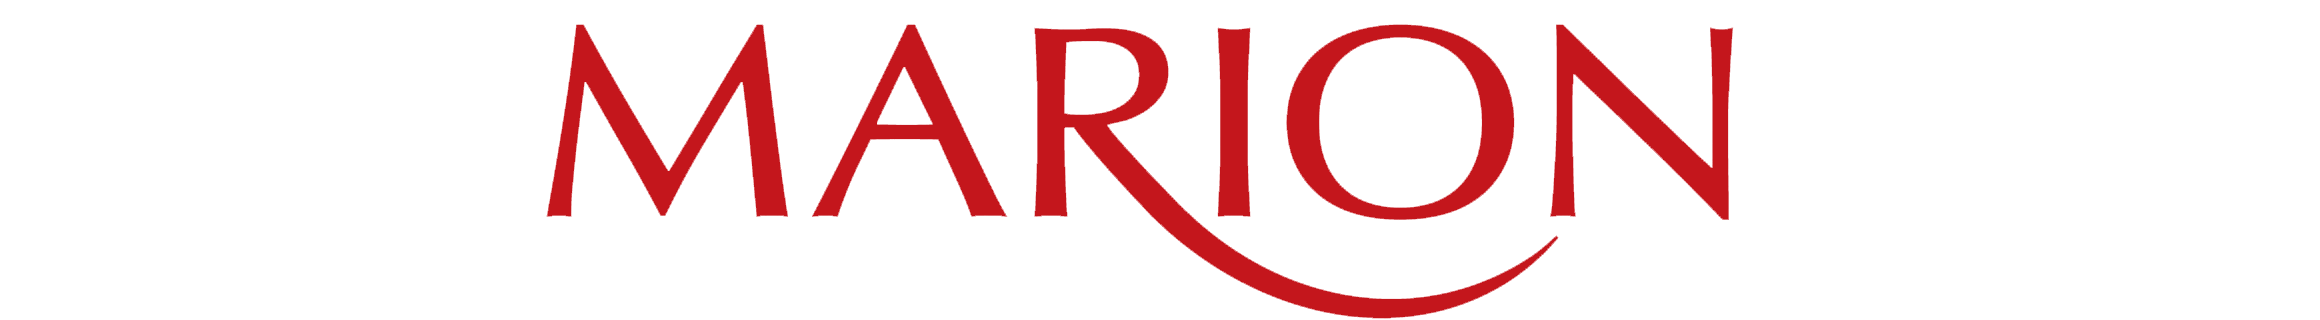 Marion_logo